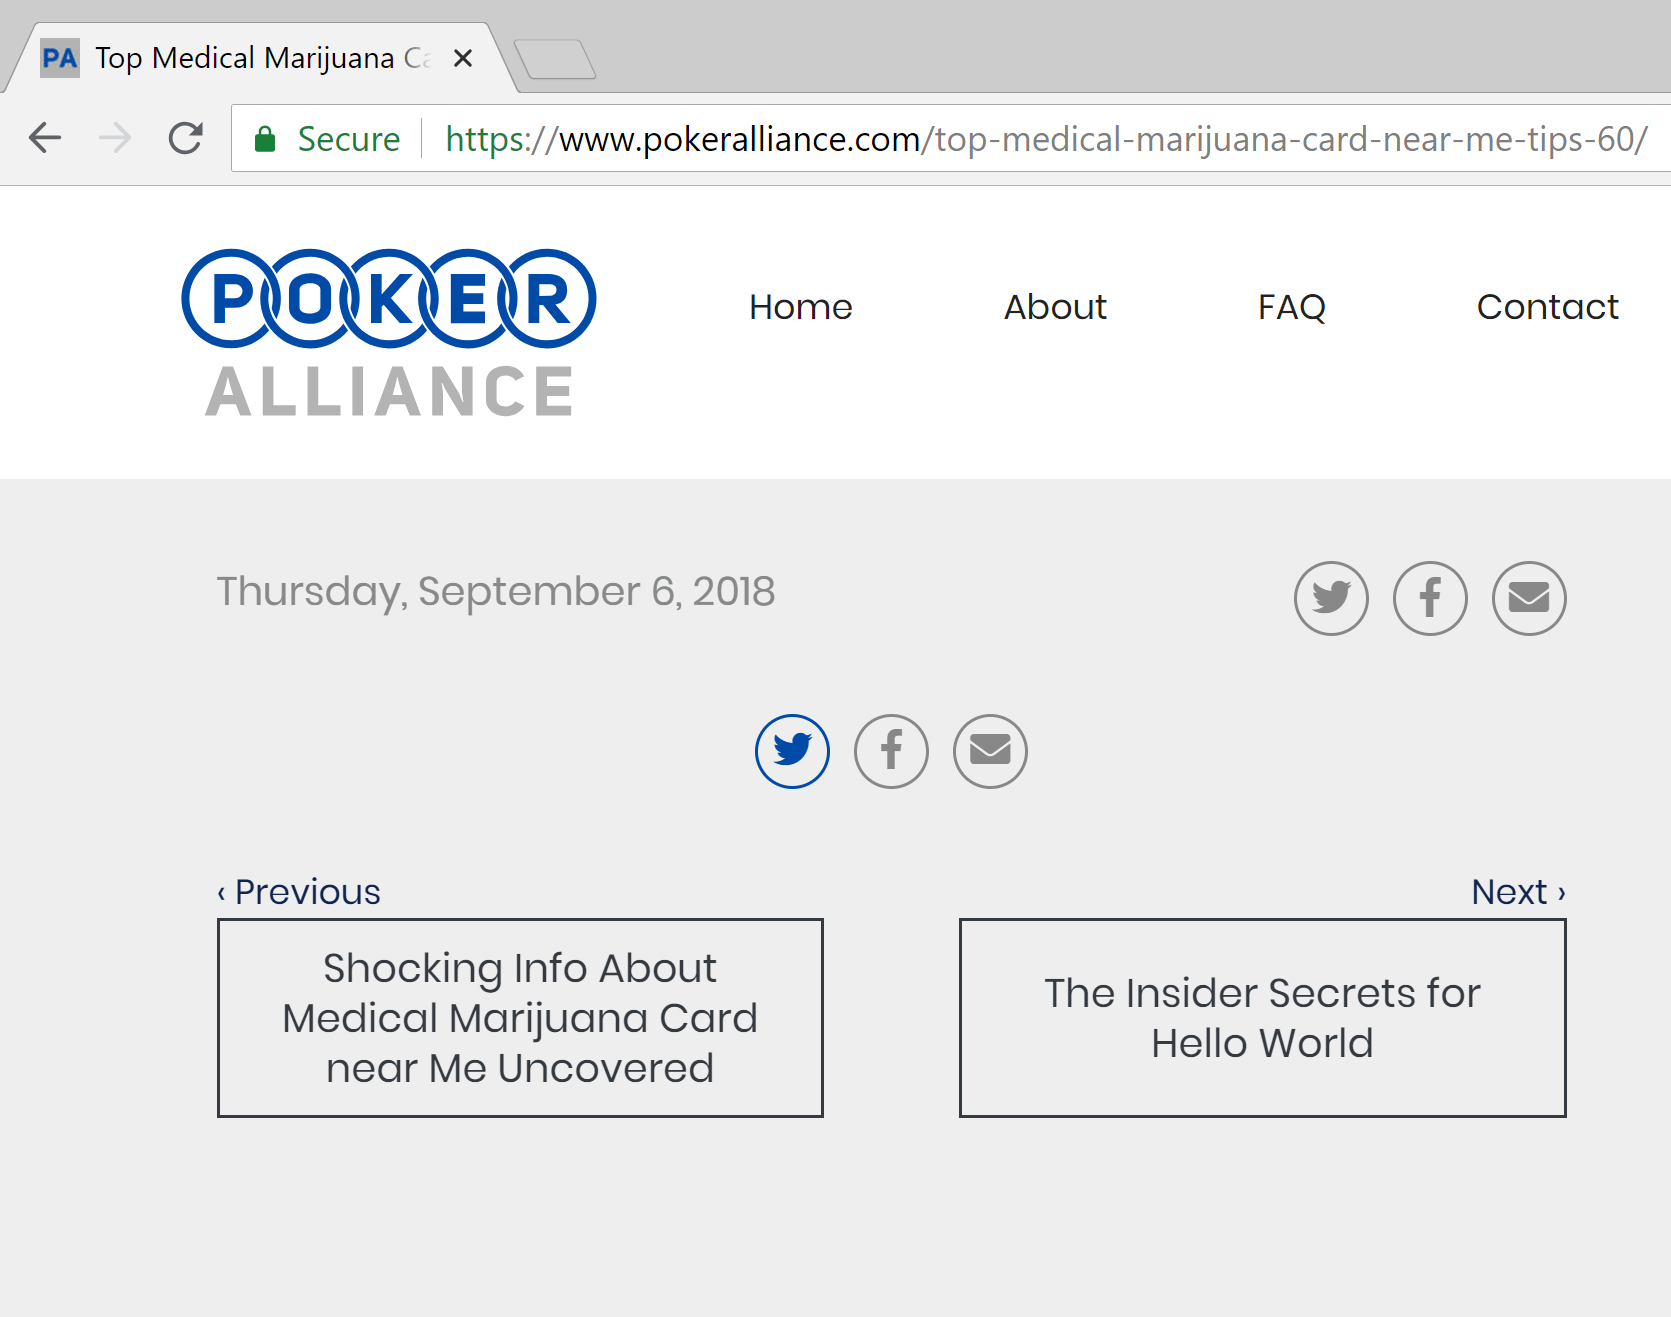 Poker Alliance Advocating for Medical Marijuana?